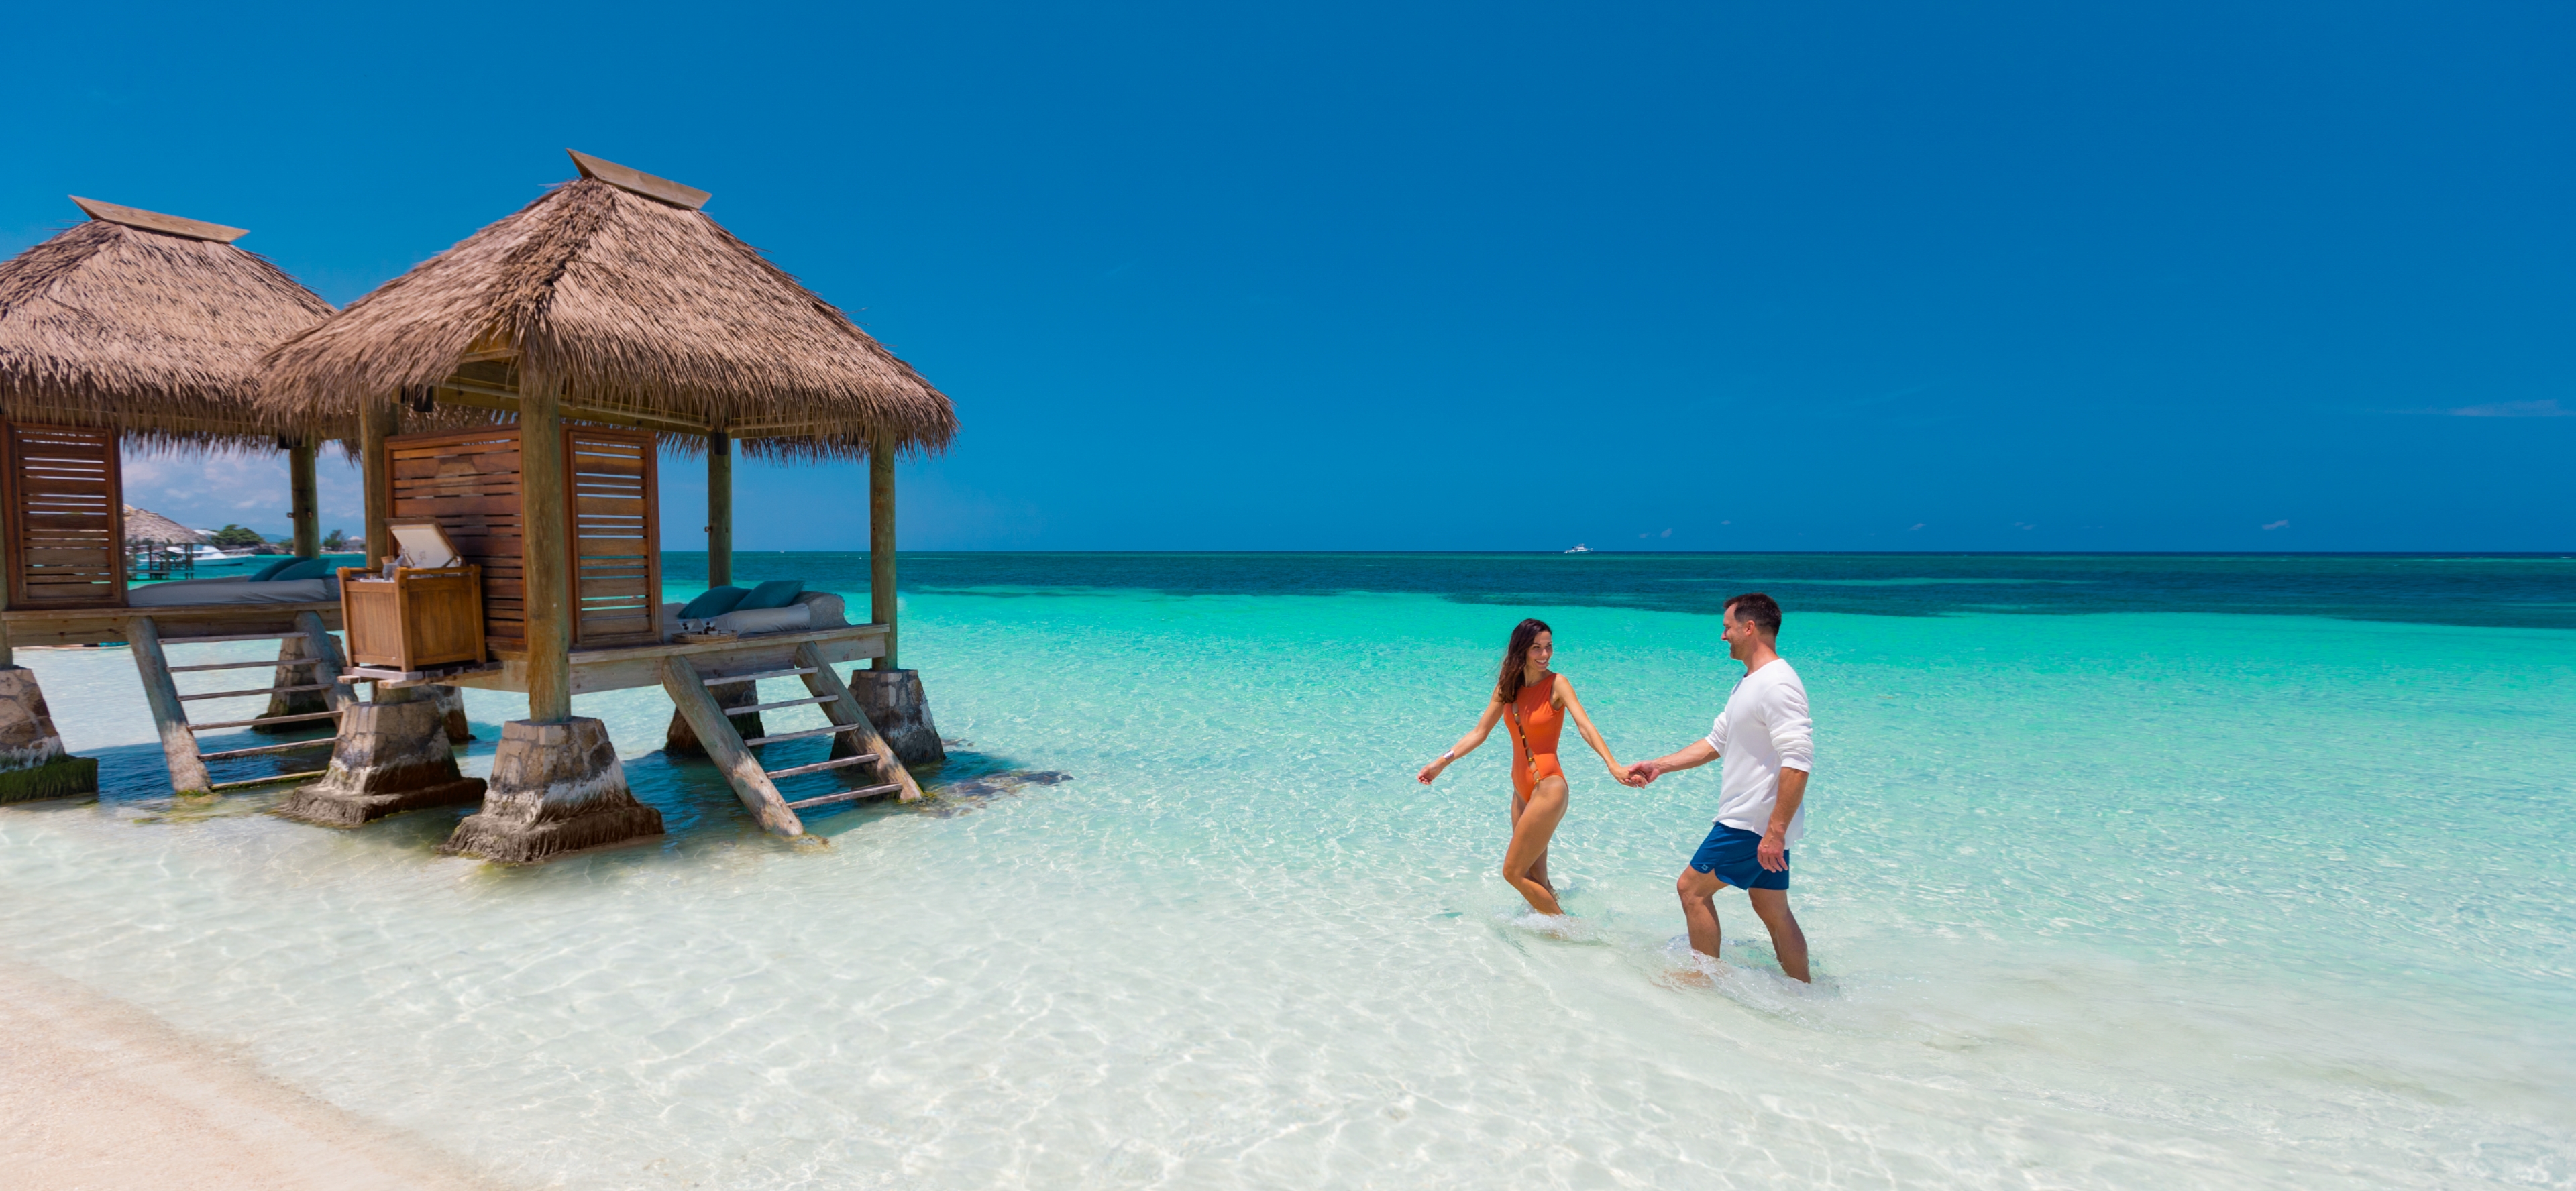 Best Sandals Resorts for a Honeymoon